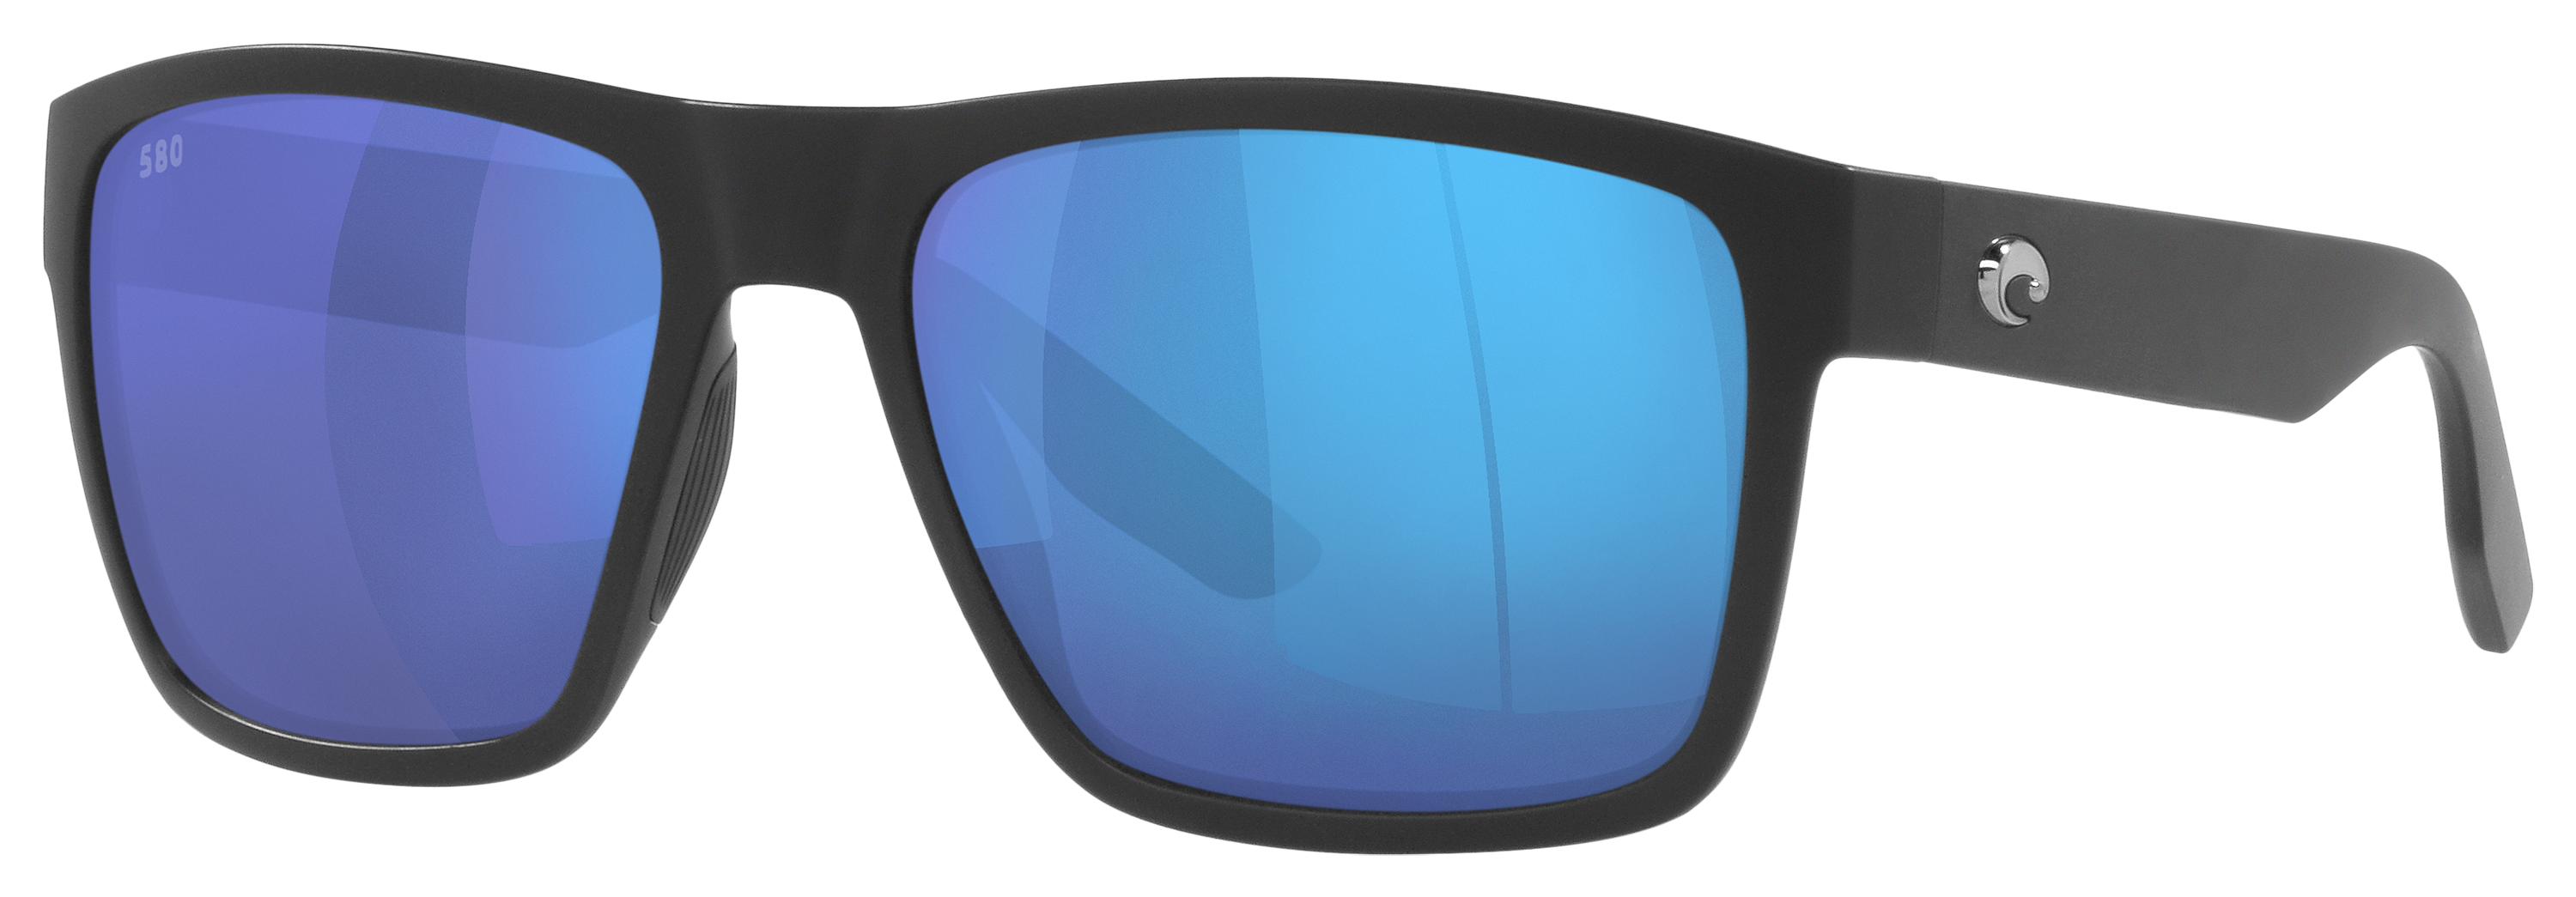 Costa Del Mar Paunch XL 580G Glass Polarized Sunglasses - Matte Black/Blue Mirror - Medium